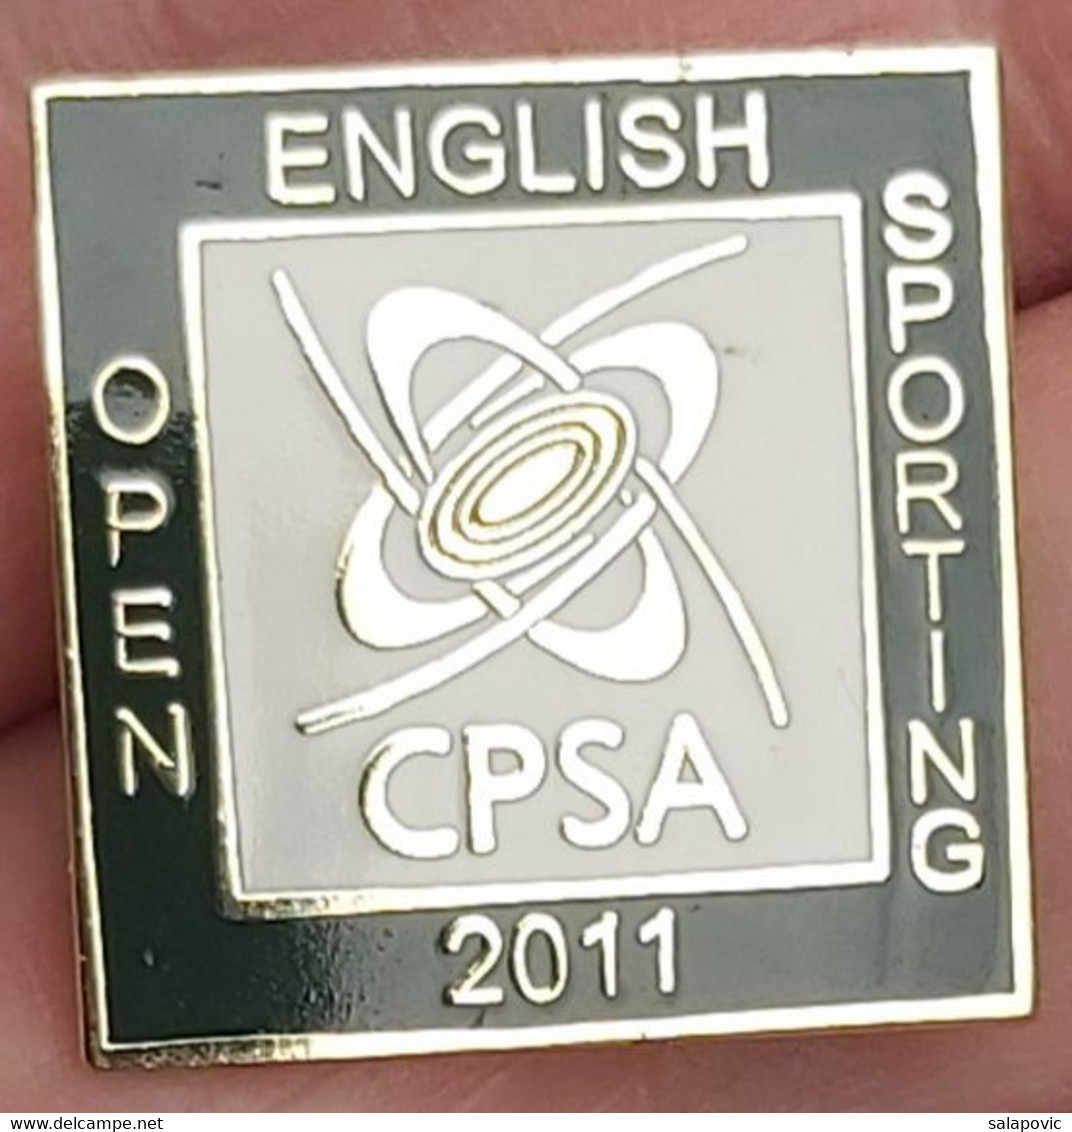 English Open Sporting (CPSA) Clay Pigeon Shooting Association  2011 Archery Shooting PINS BADGES A5/4 - Tir à L'Arc